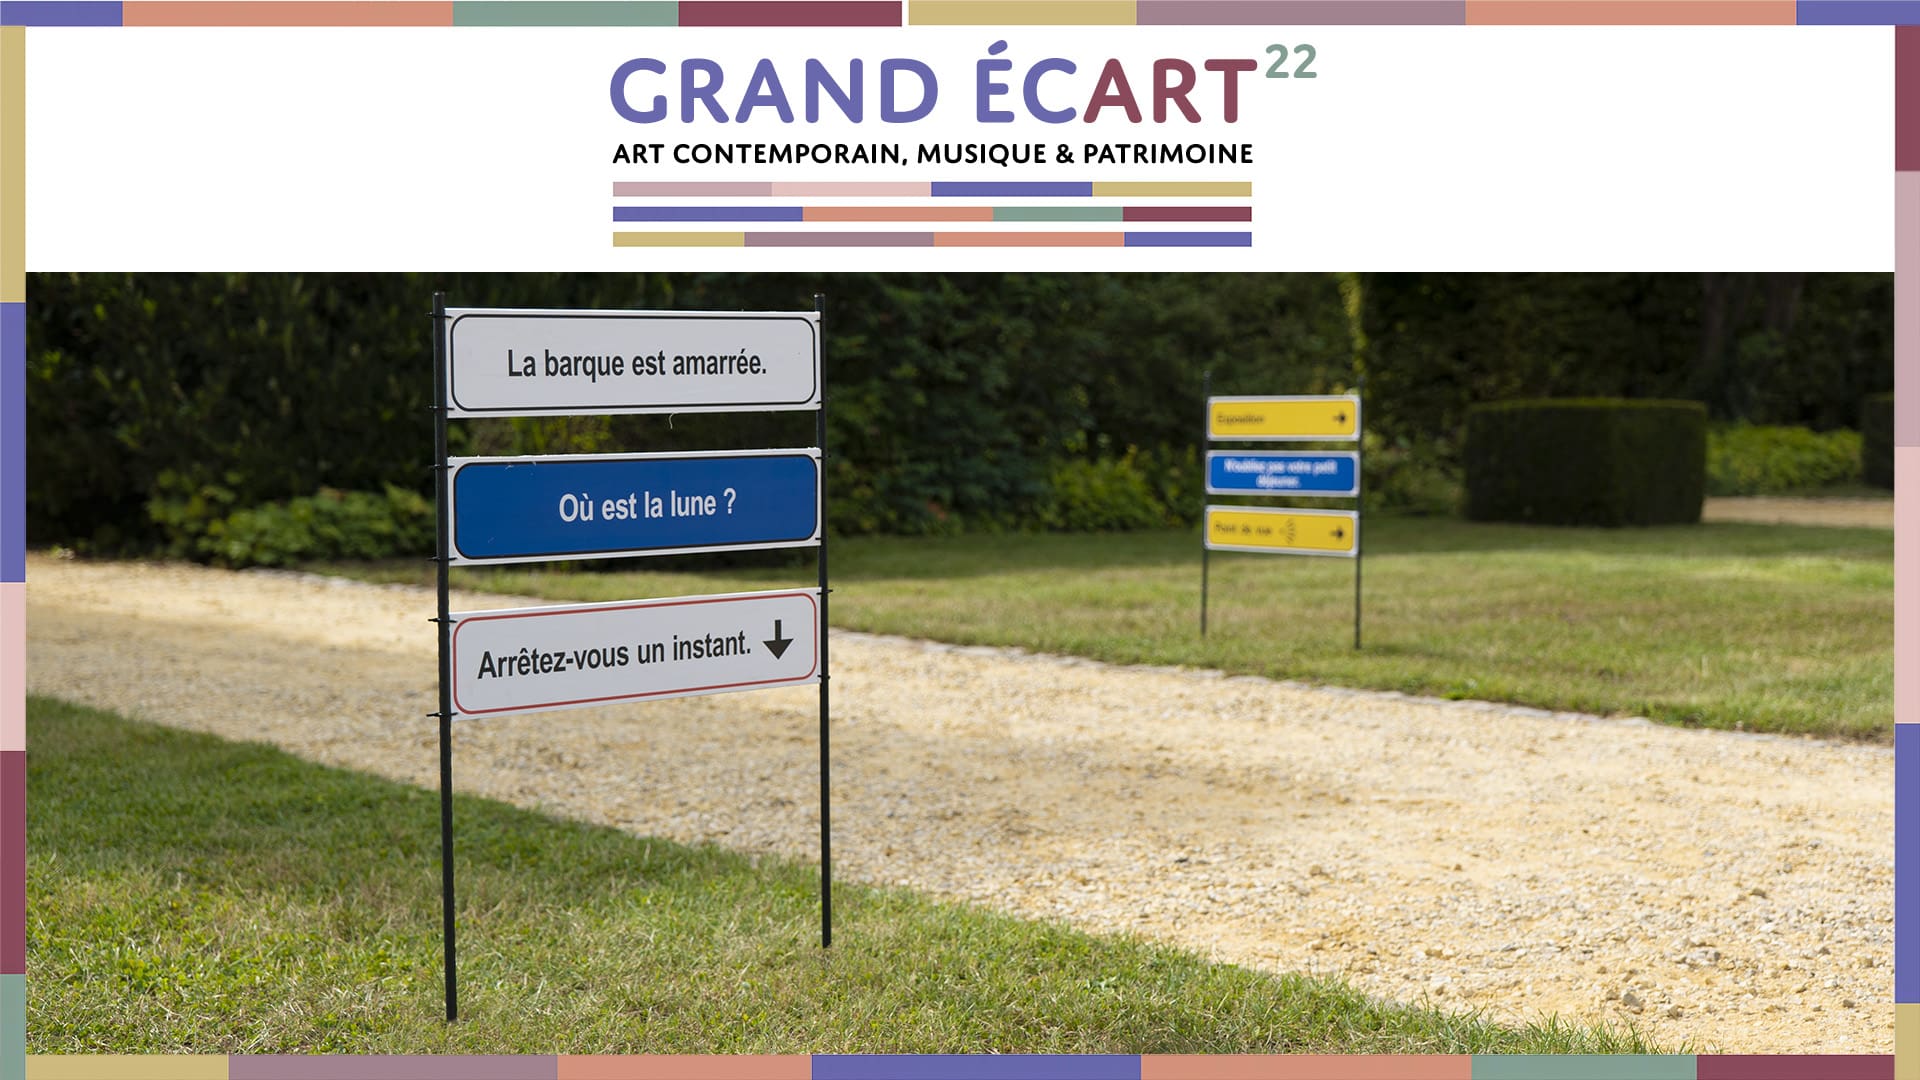 Grand Ecart 22 Festival website